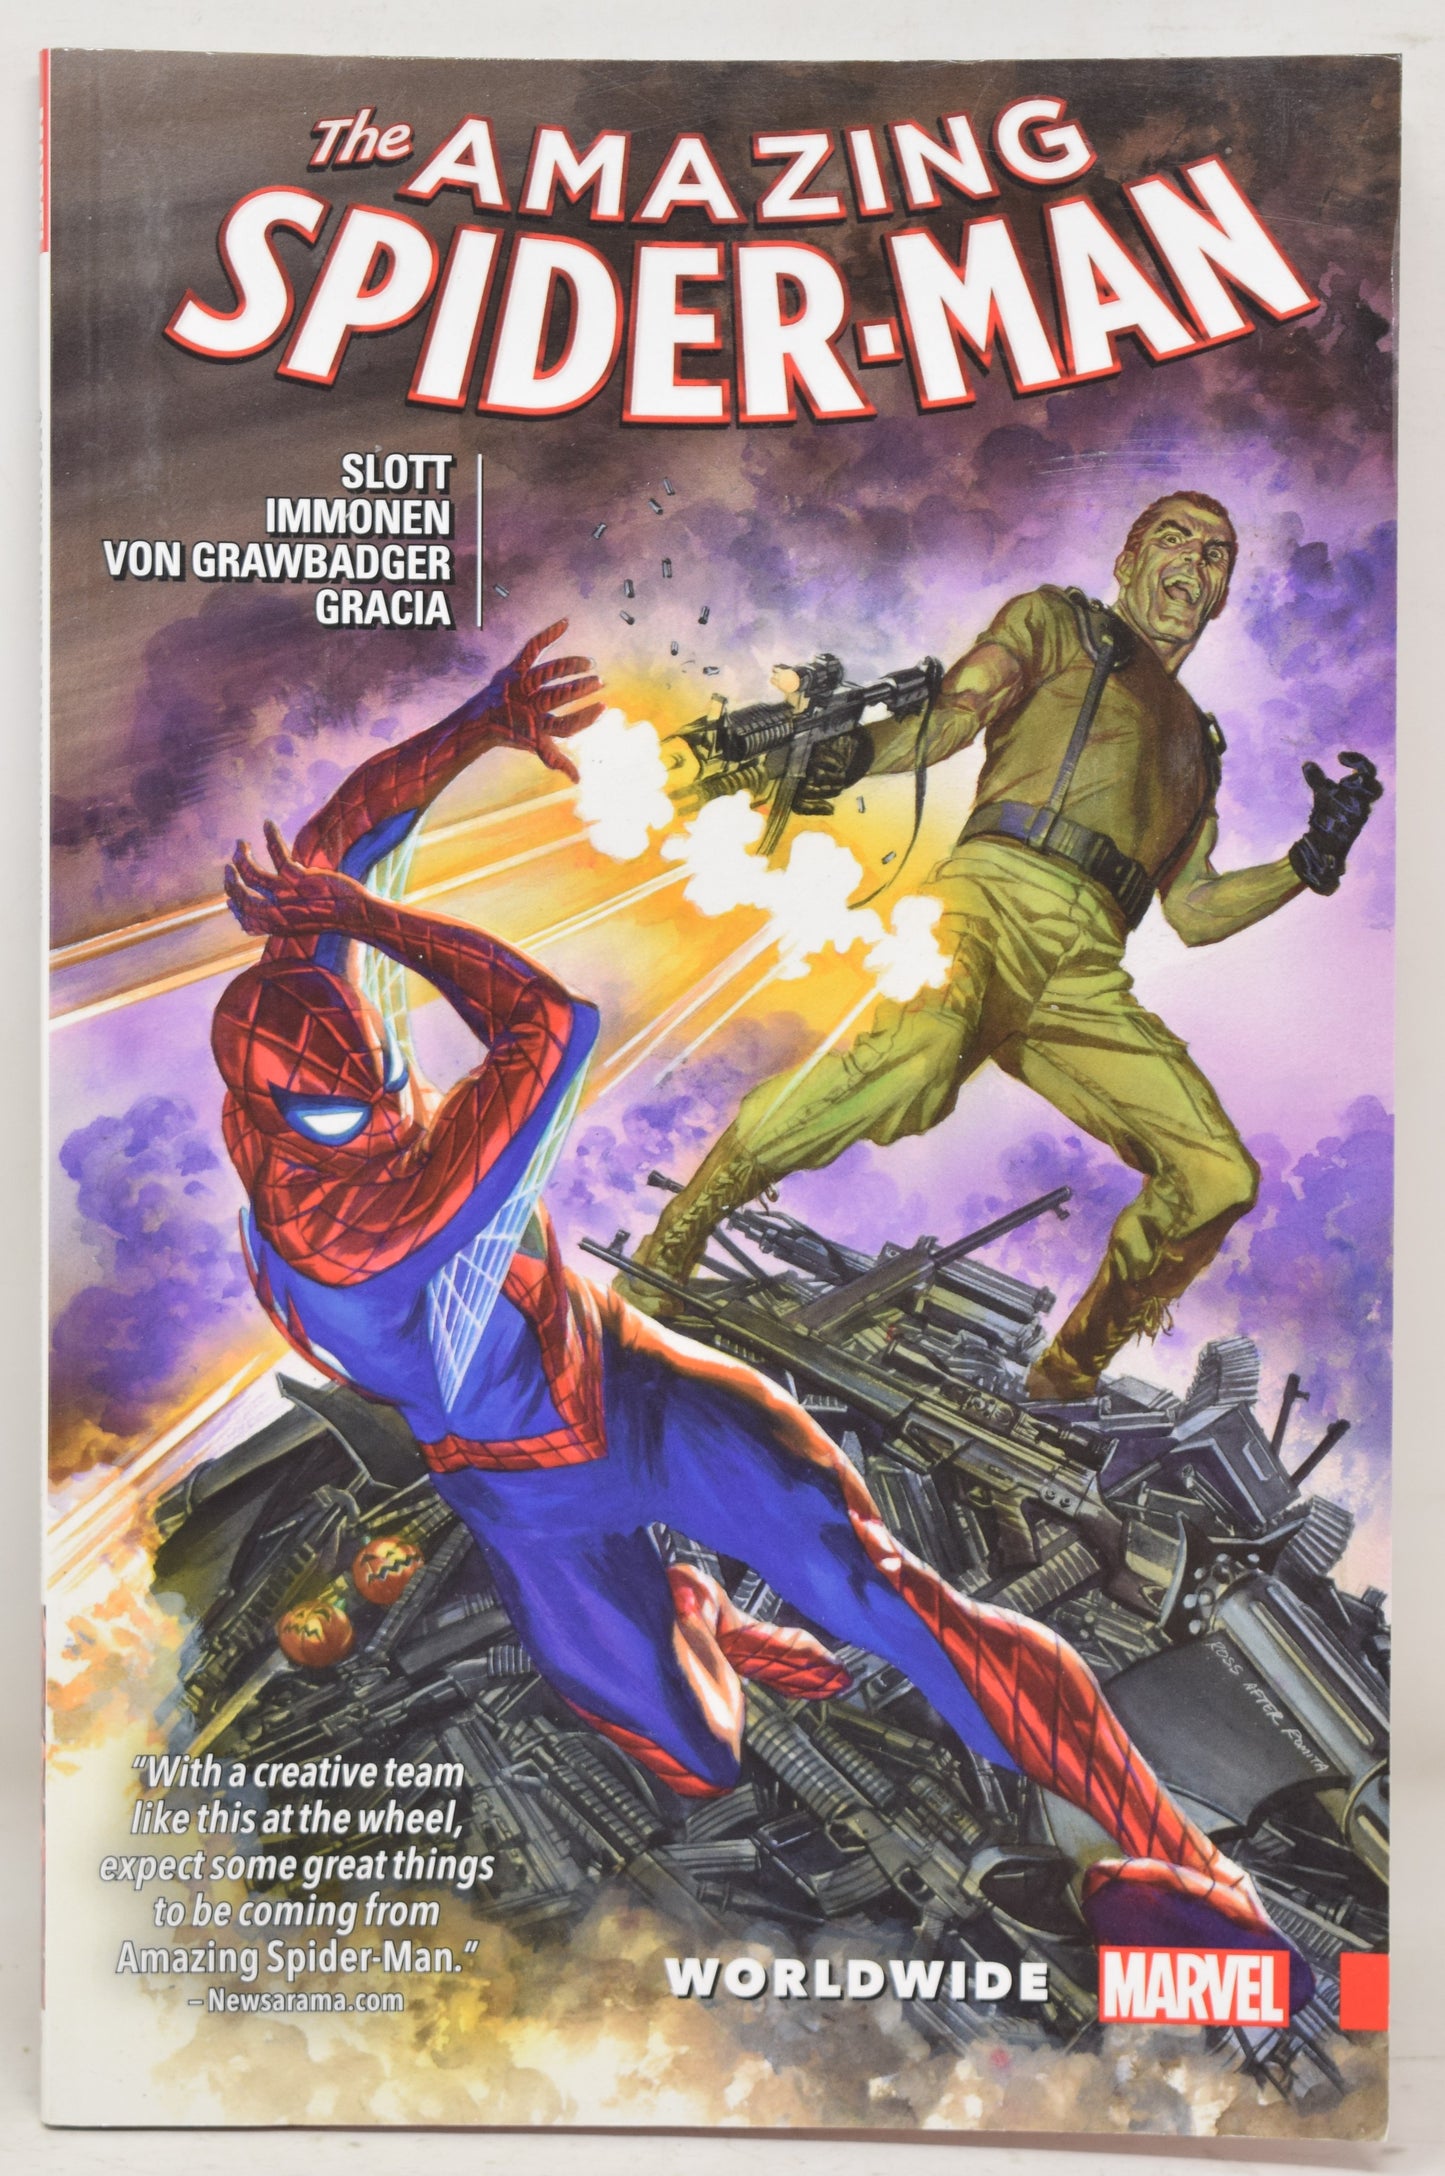 Amazing Spider-Man Worldwide Vol 6 Marvel 2015 GN NM New